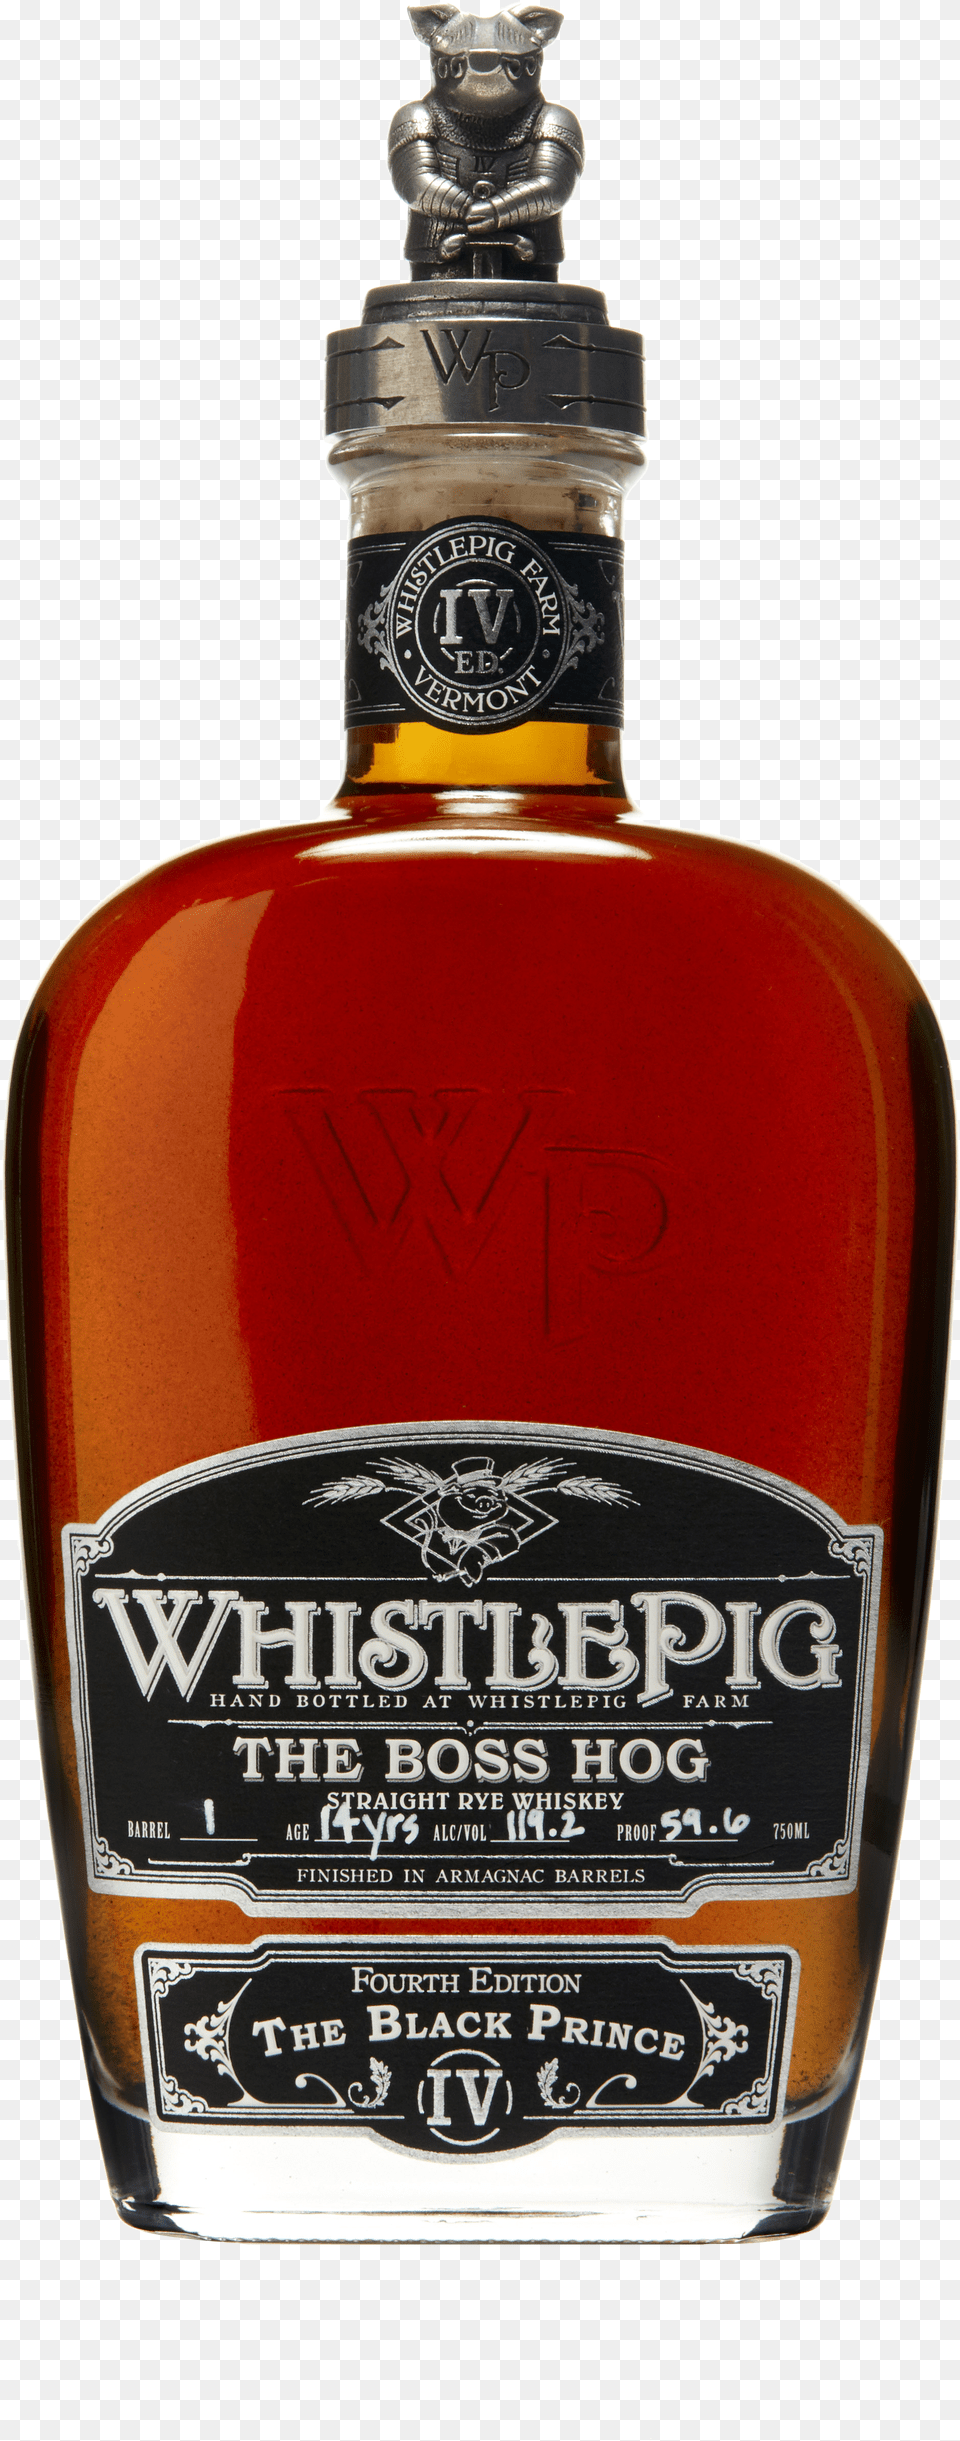 Bhiv Transparent Bottle Shot Image Whistlepig Rye Whiskey 13 Year The Boss Hog Png